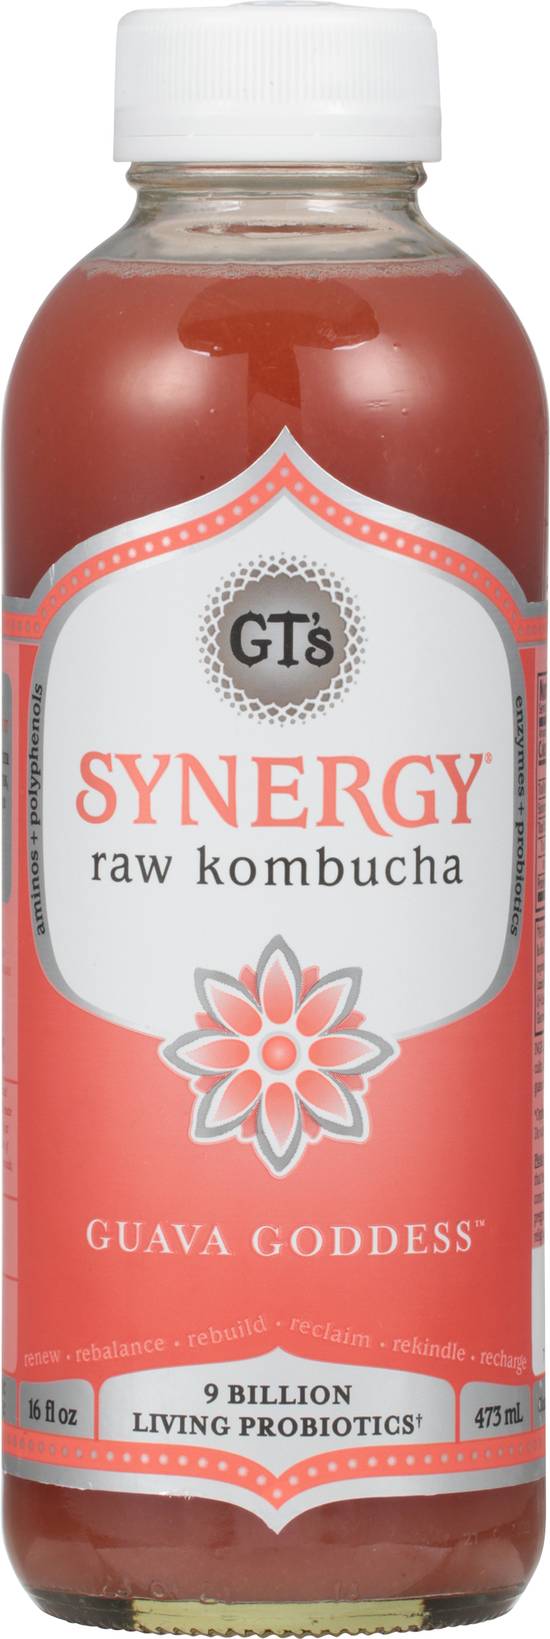 Gt's Guava Goddess Synergy Raw Kombucha (16 fl oz)